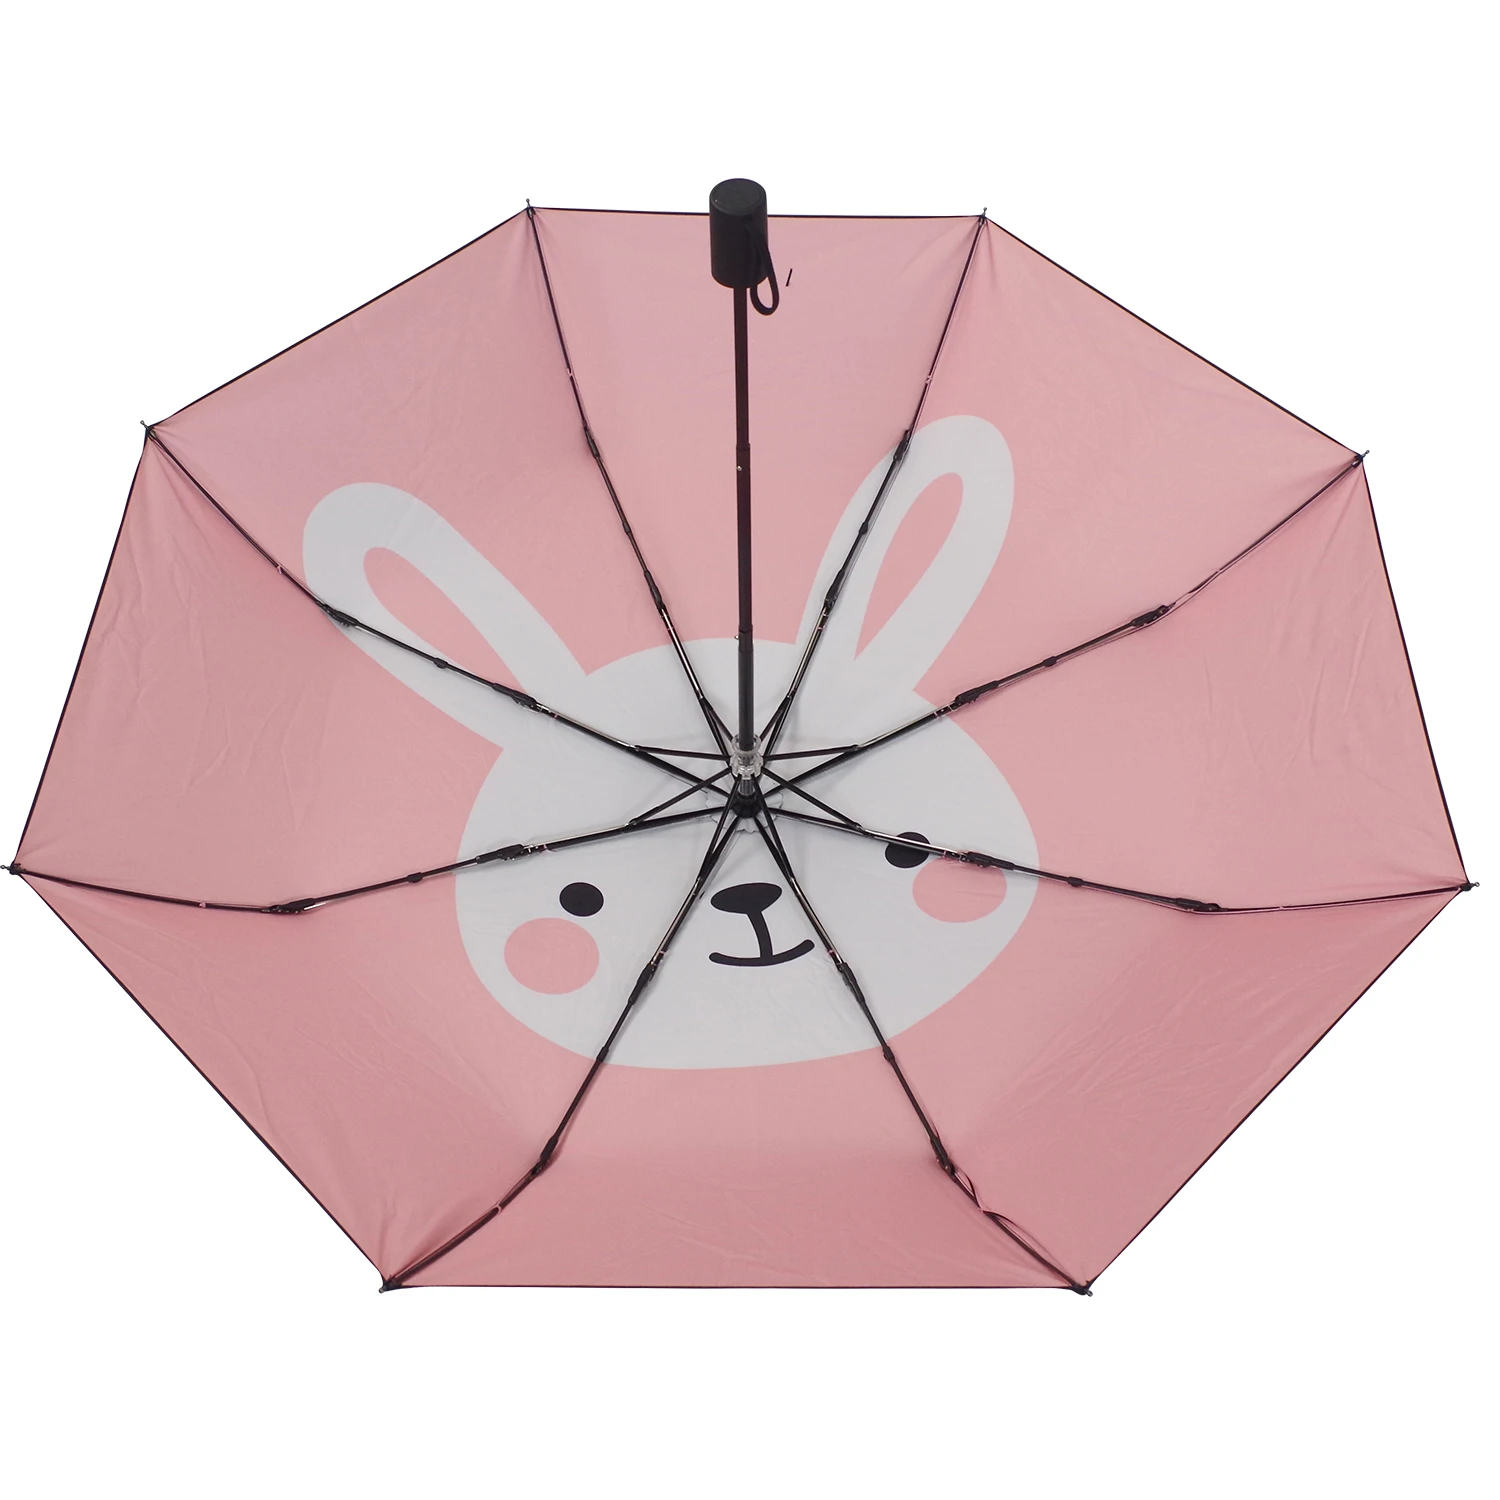 

Windproof compact 3 fold umberella for rain and sun small umbrella with uv